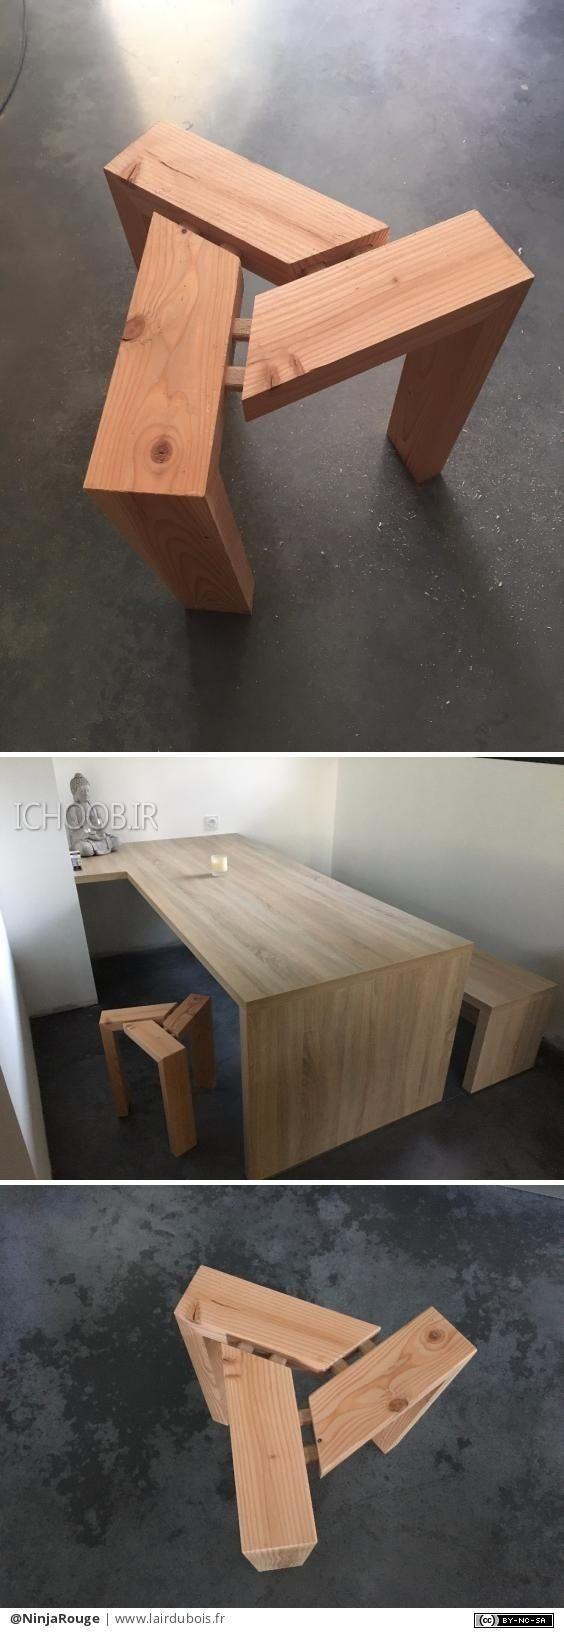 اتصال چوب و فلز, اتصال صندلی, اتصال میز, اتصالات چوبی, اتصالات چوبی و فلزی خلاقانه, اتصالات خلاقانه, اتصالات فلزی, ایده اتصال چوبی